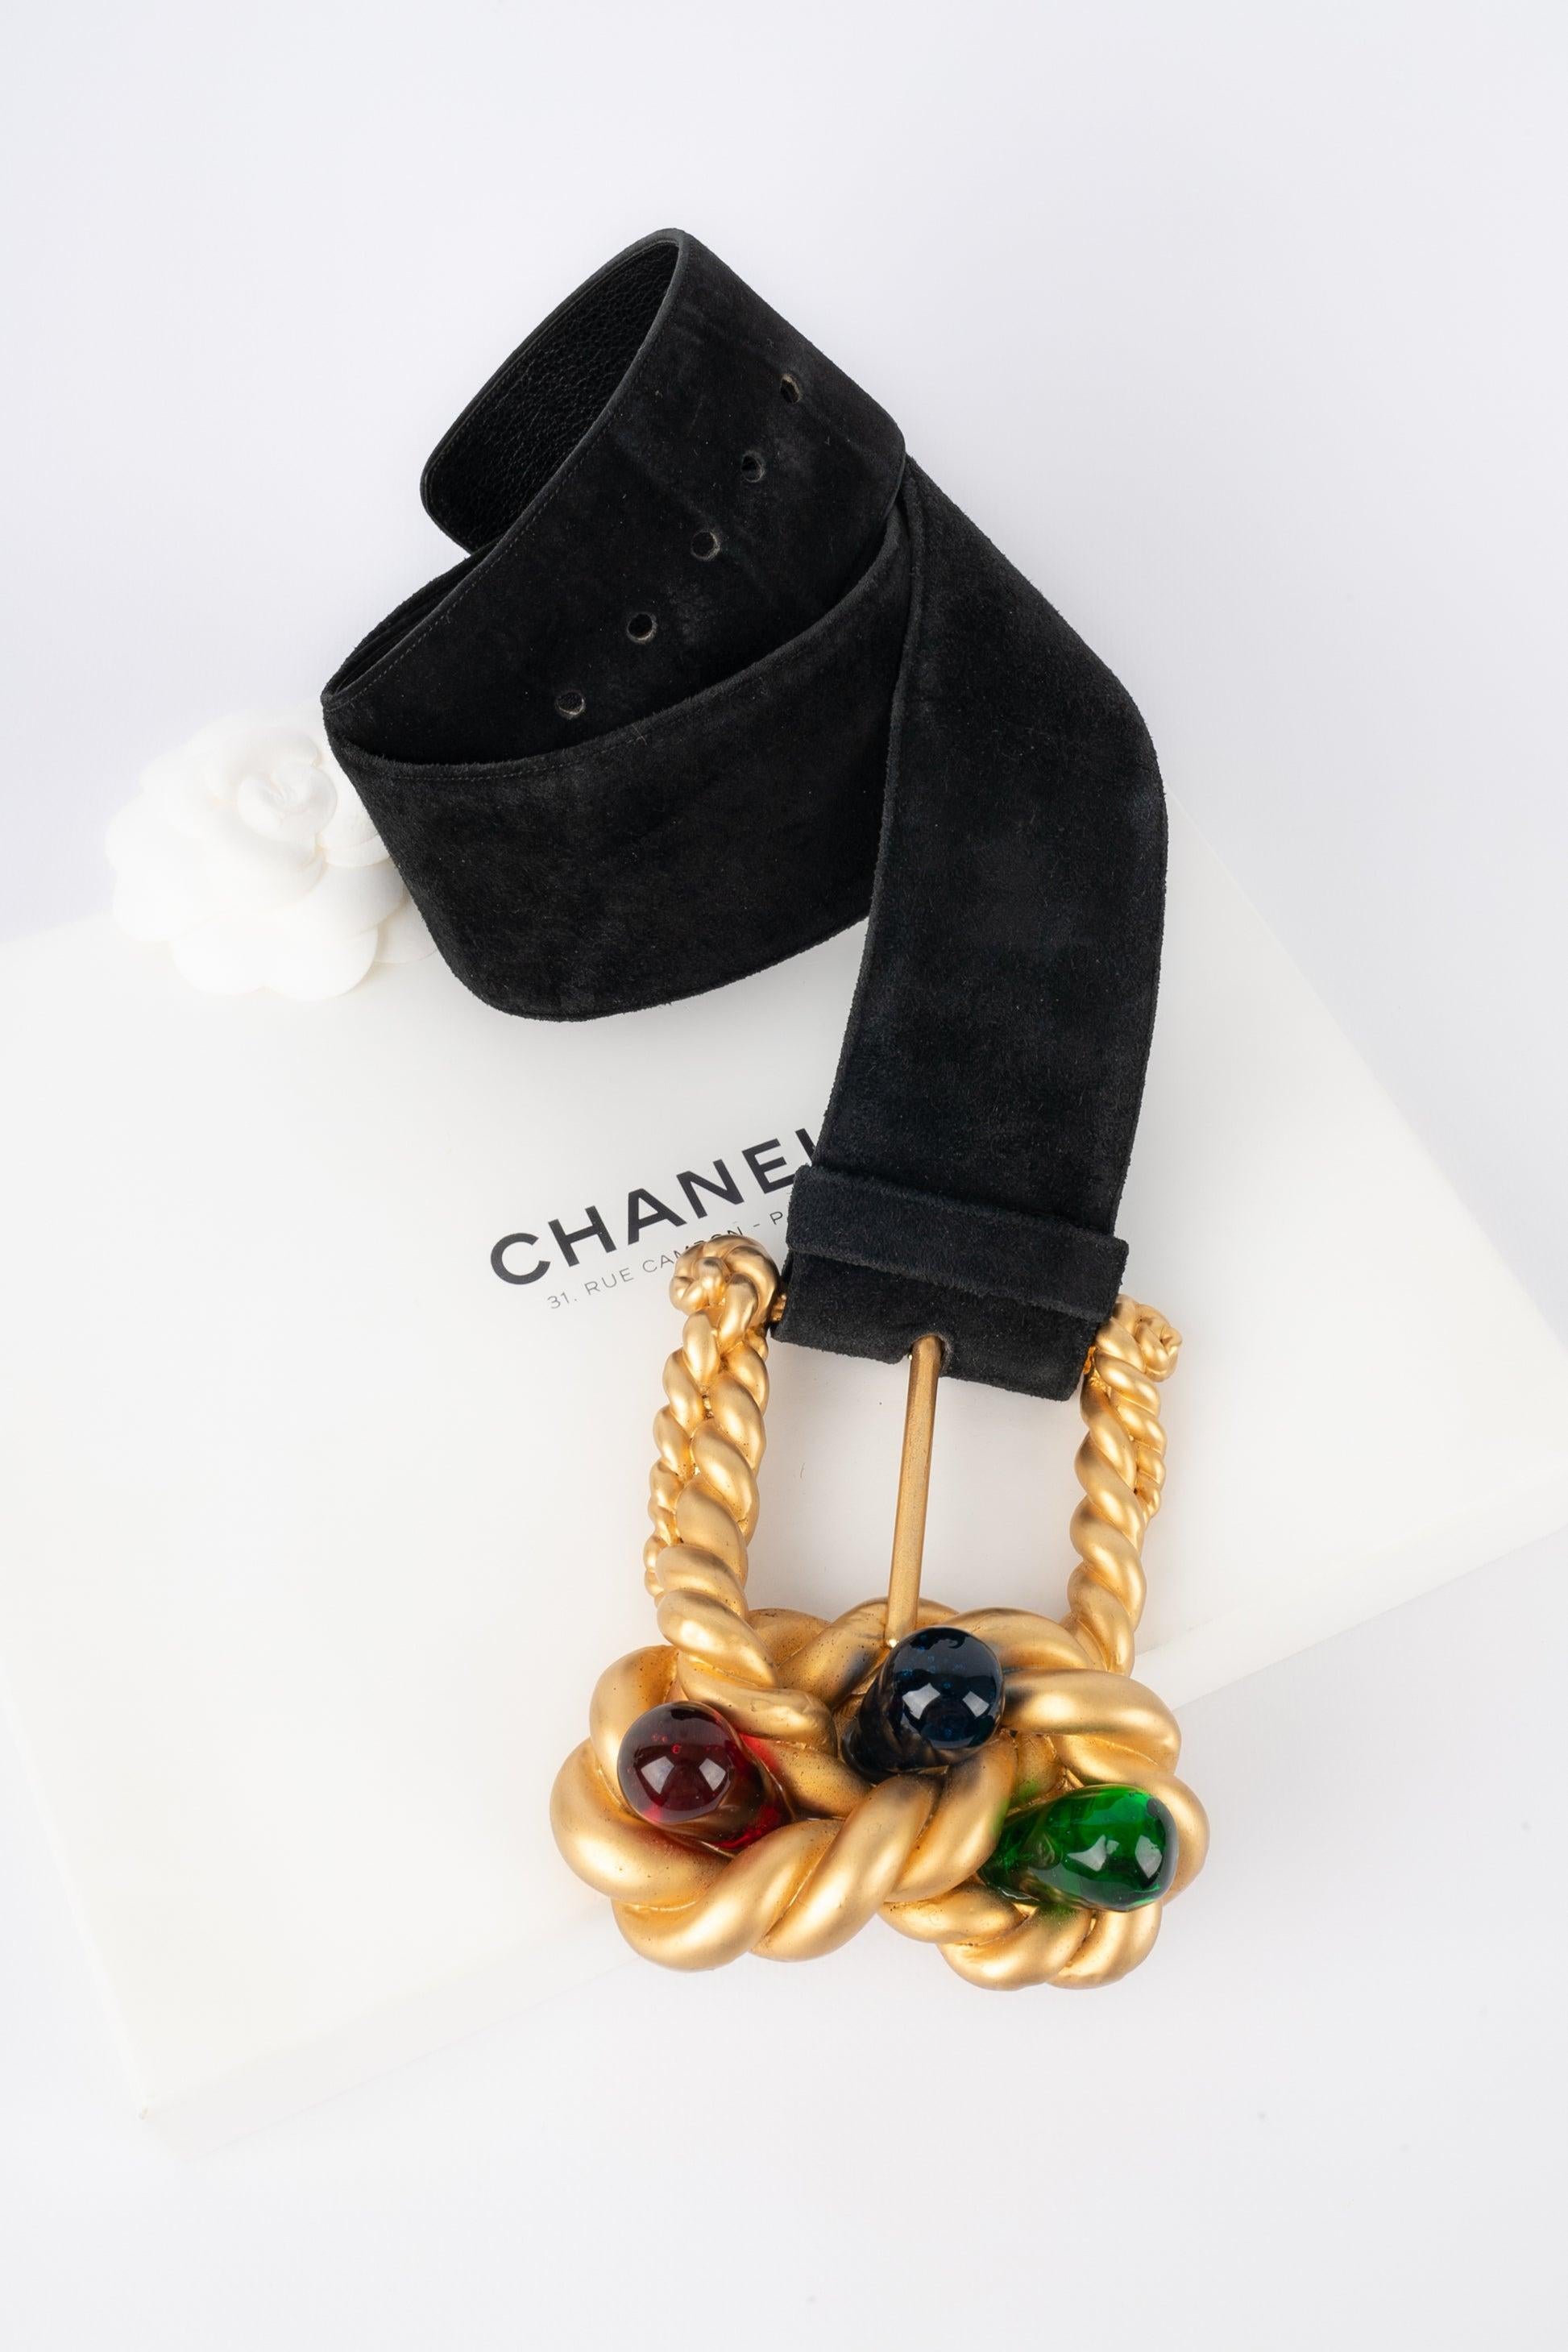 Chanel Black Leather Belt with an Impressive Golden Metal Buckle, 1991 For Sale 6